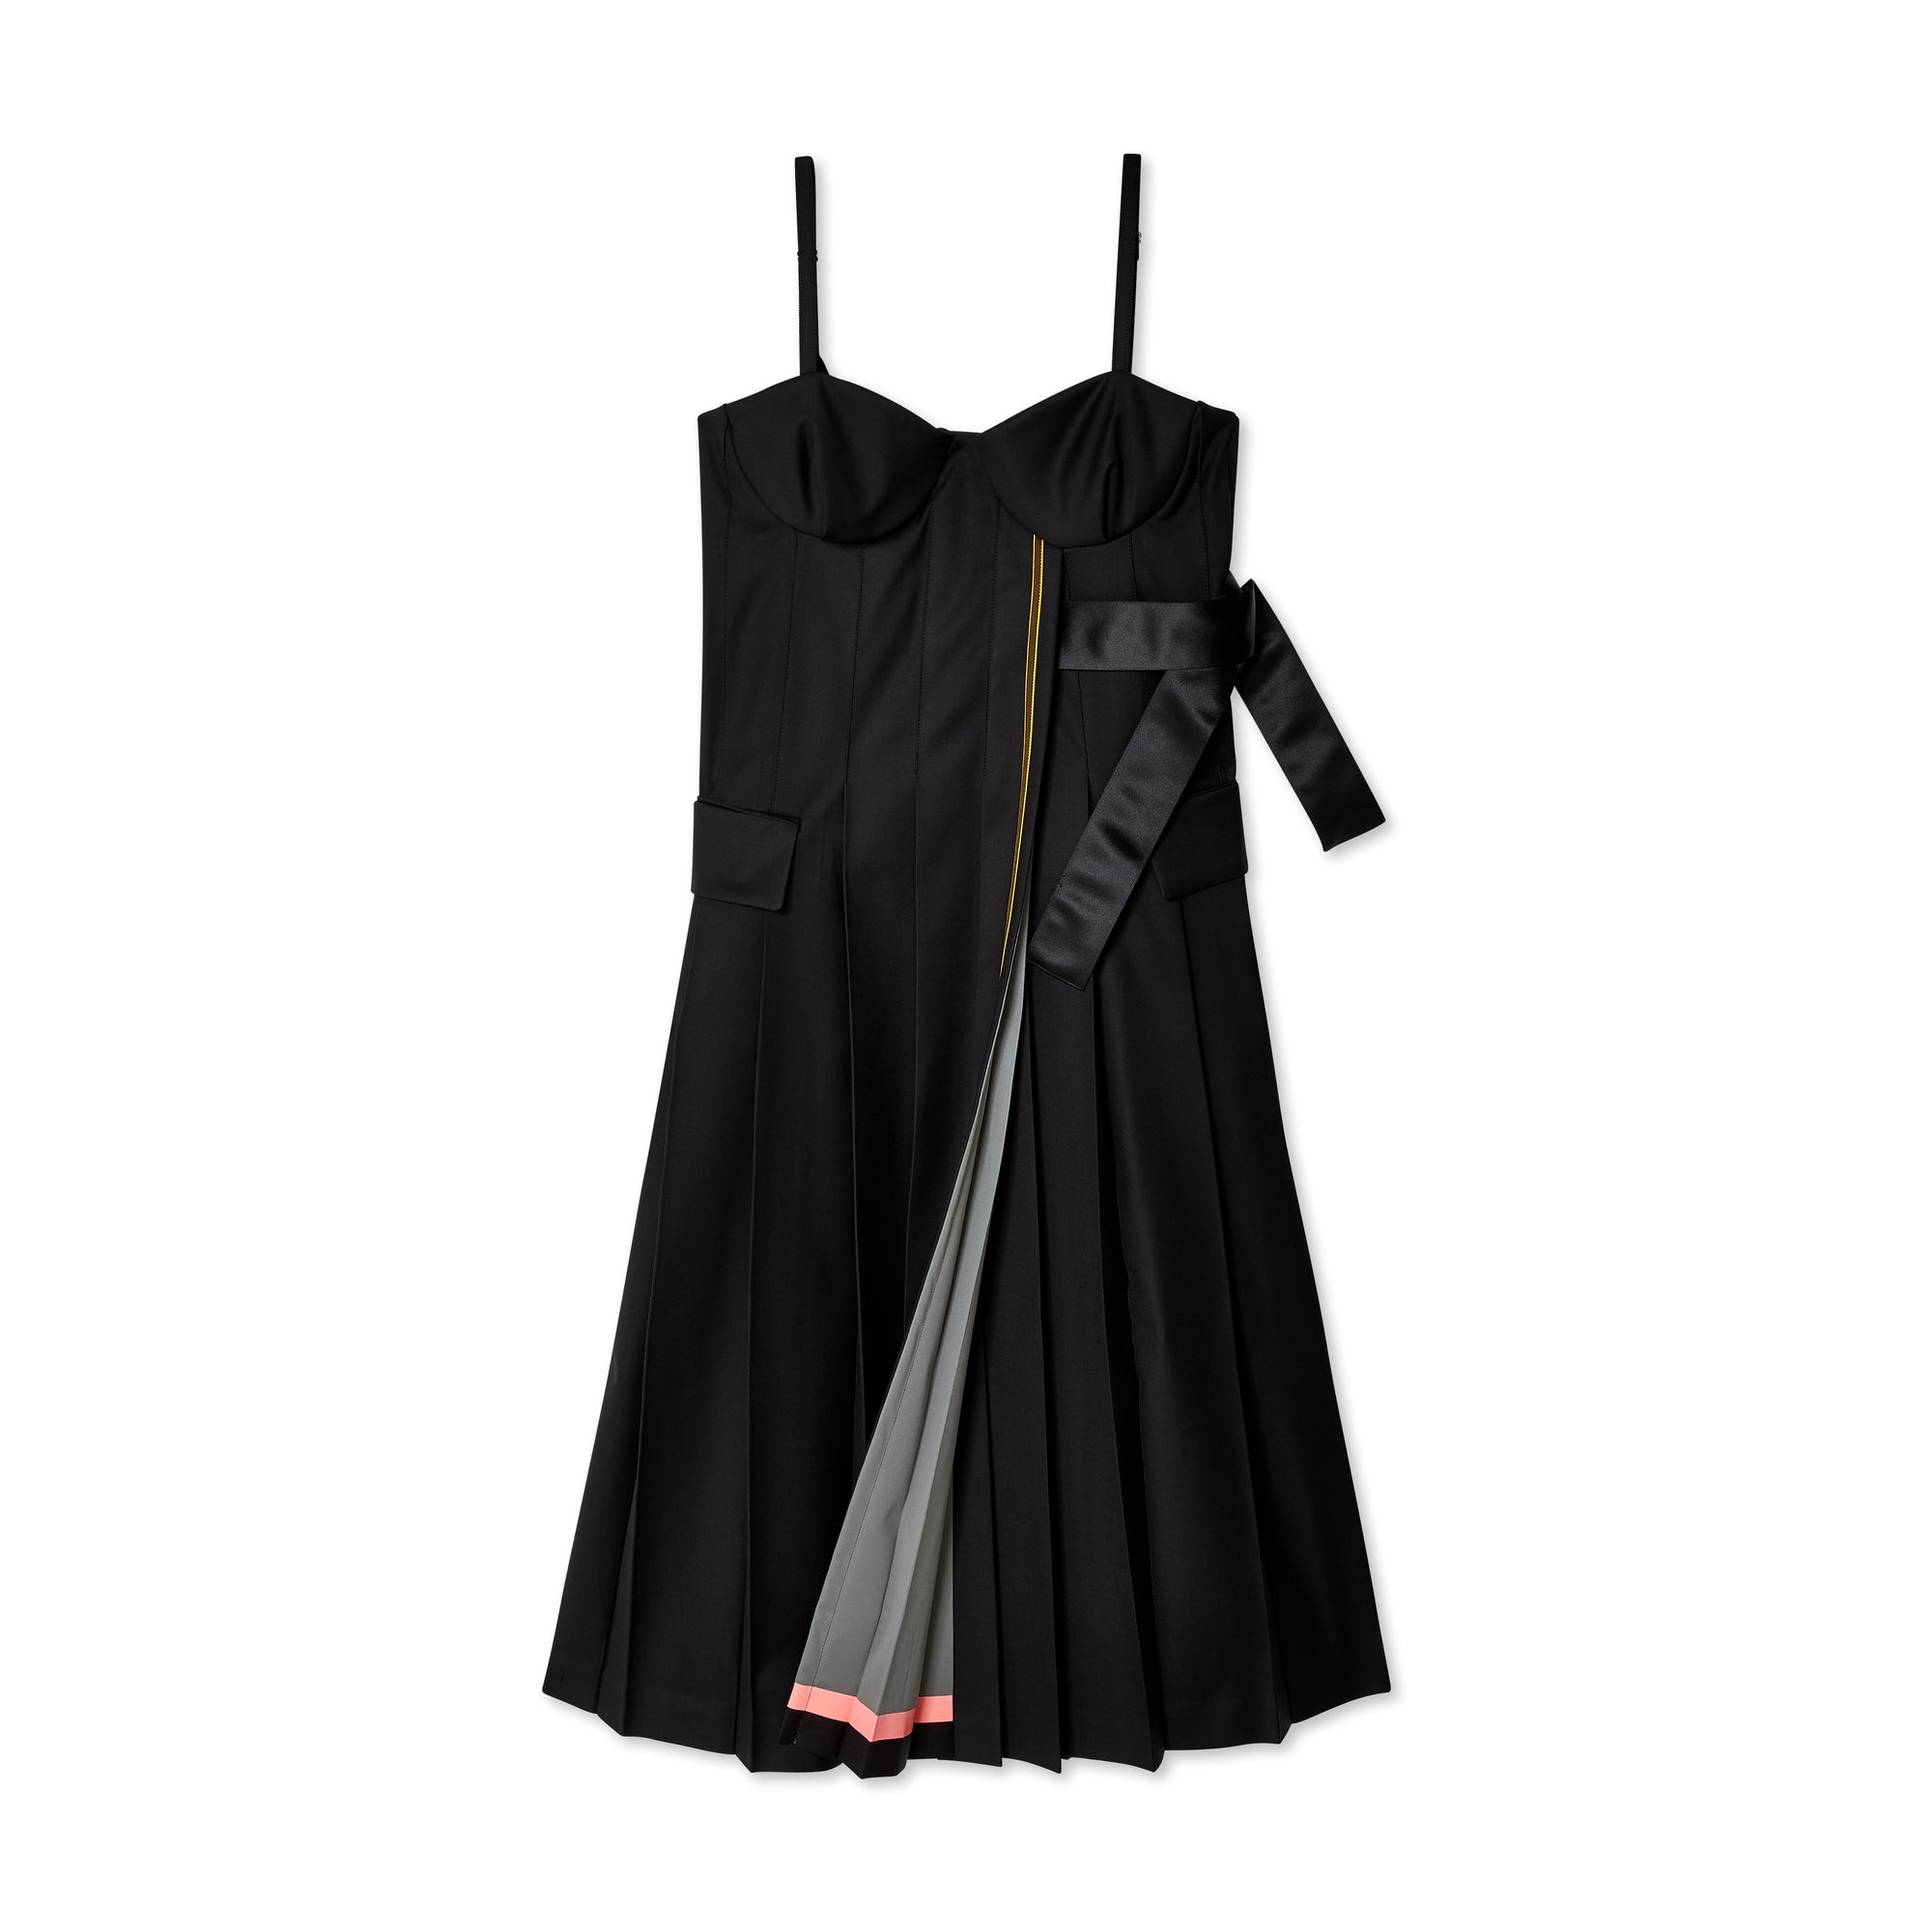 sacai - Women's Suiting Dress - (Black) view 1